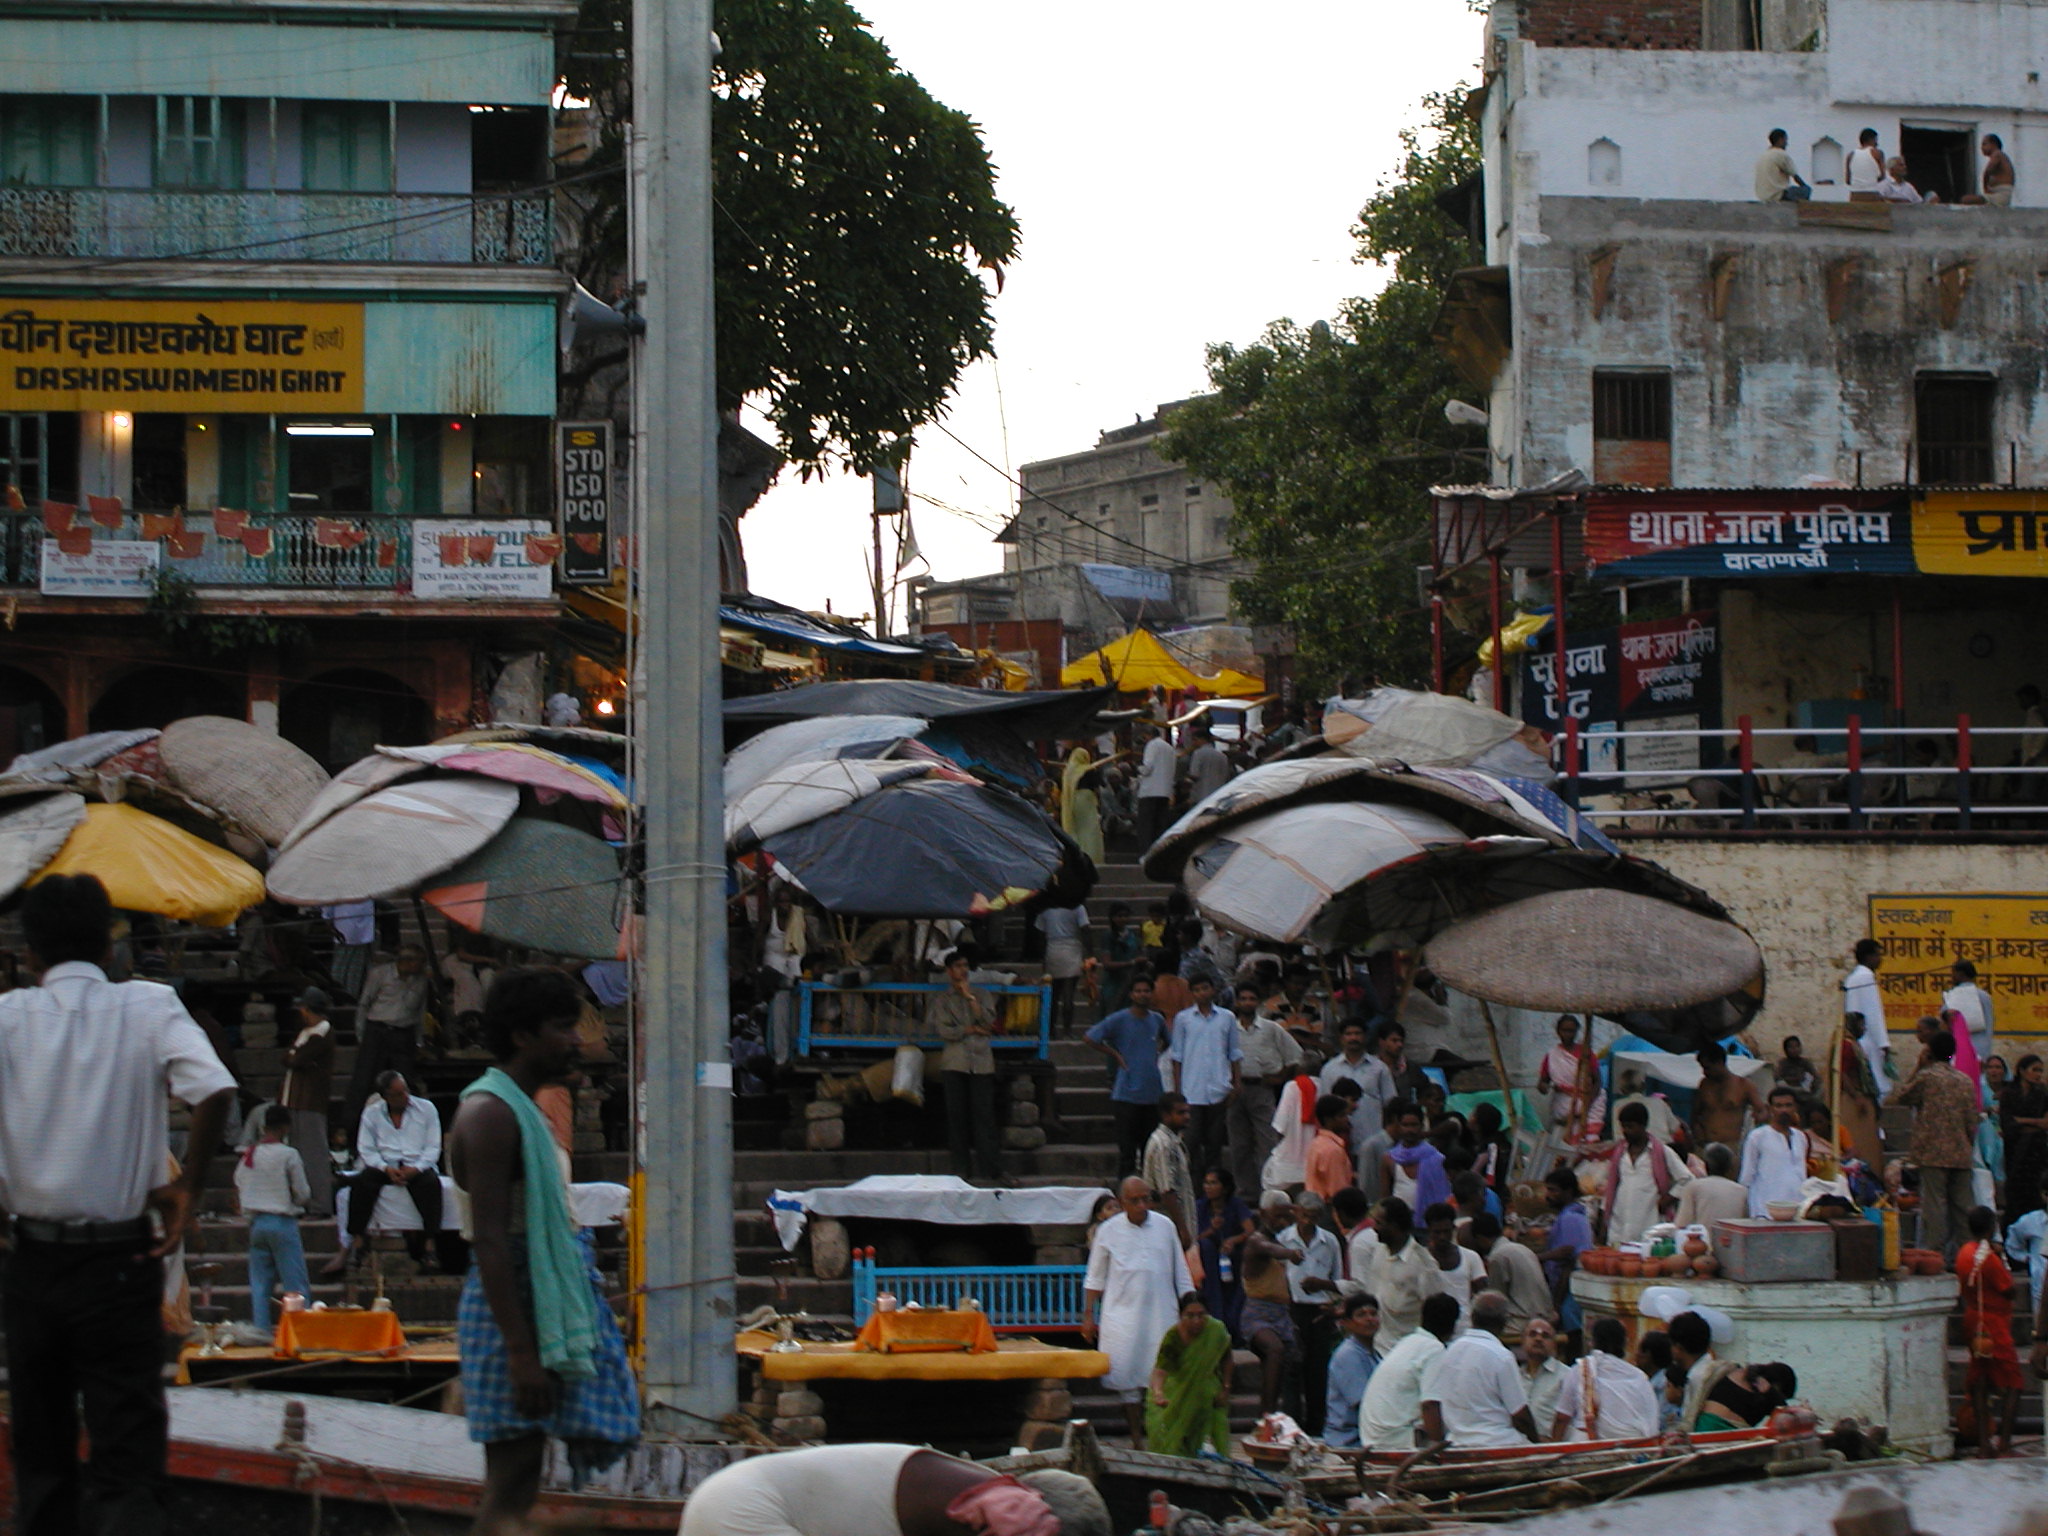 A marketplace in Varanasi